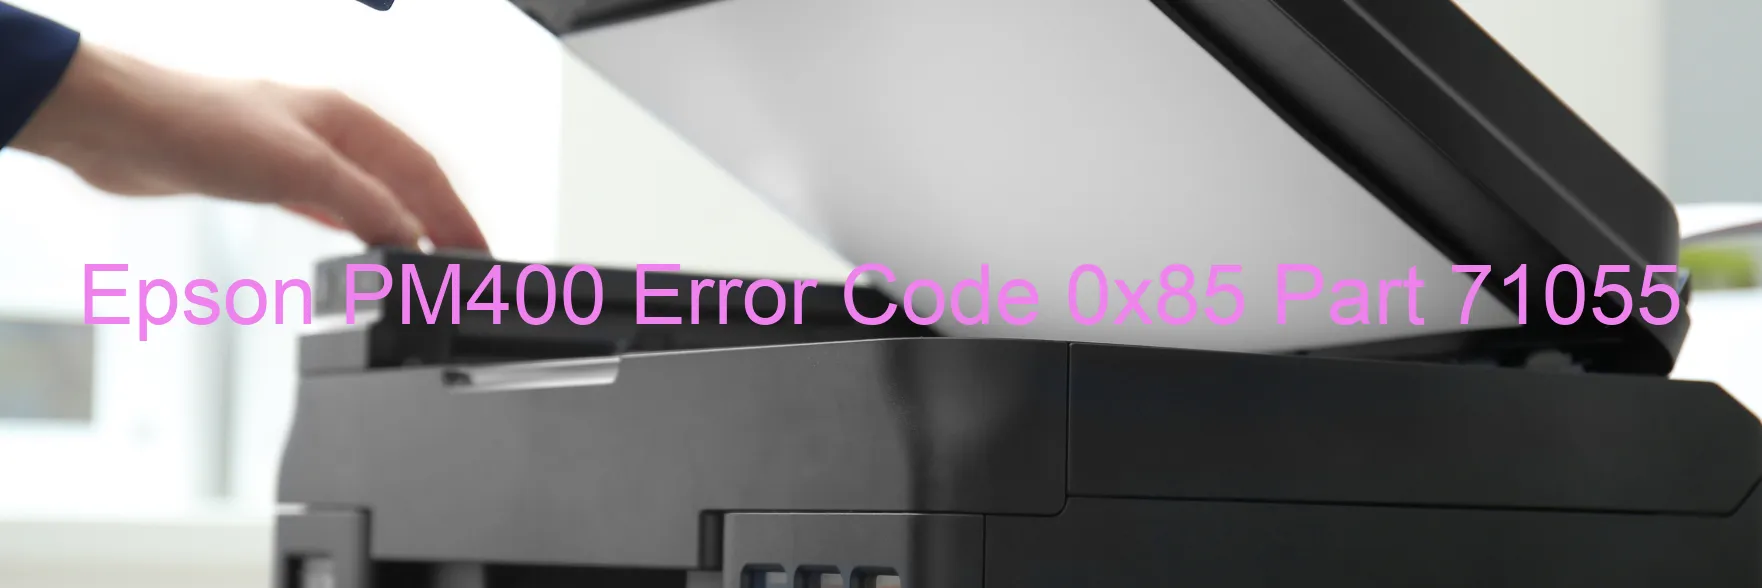 Epson PM400 Error Code 0x85 Part 71055